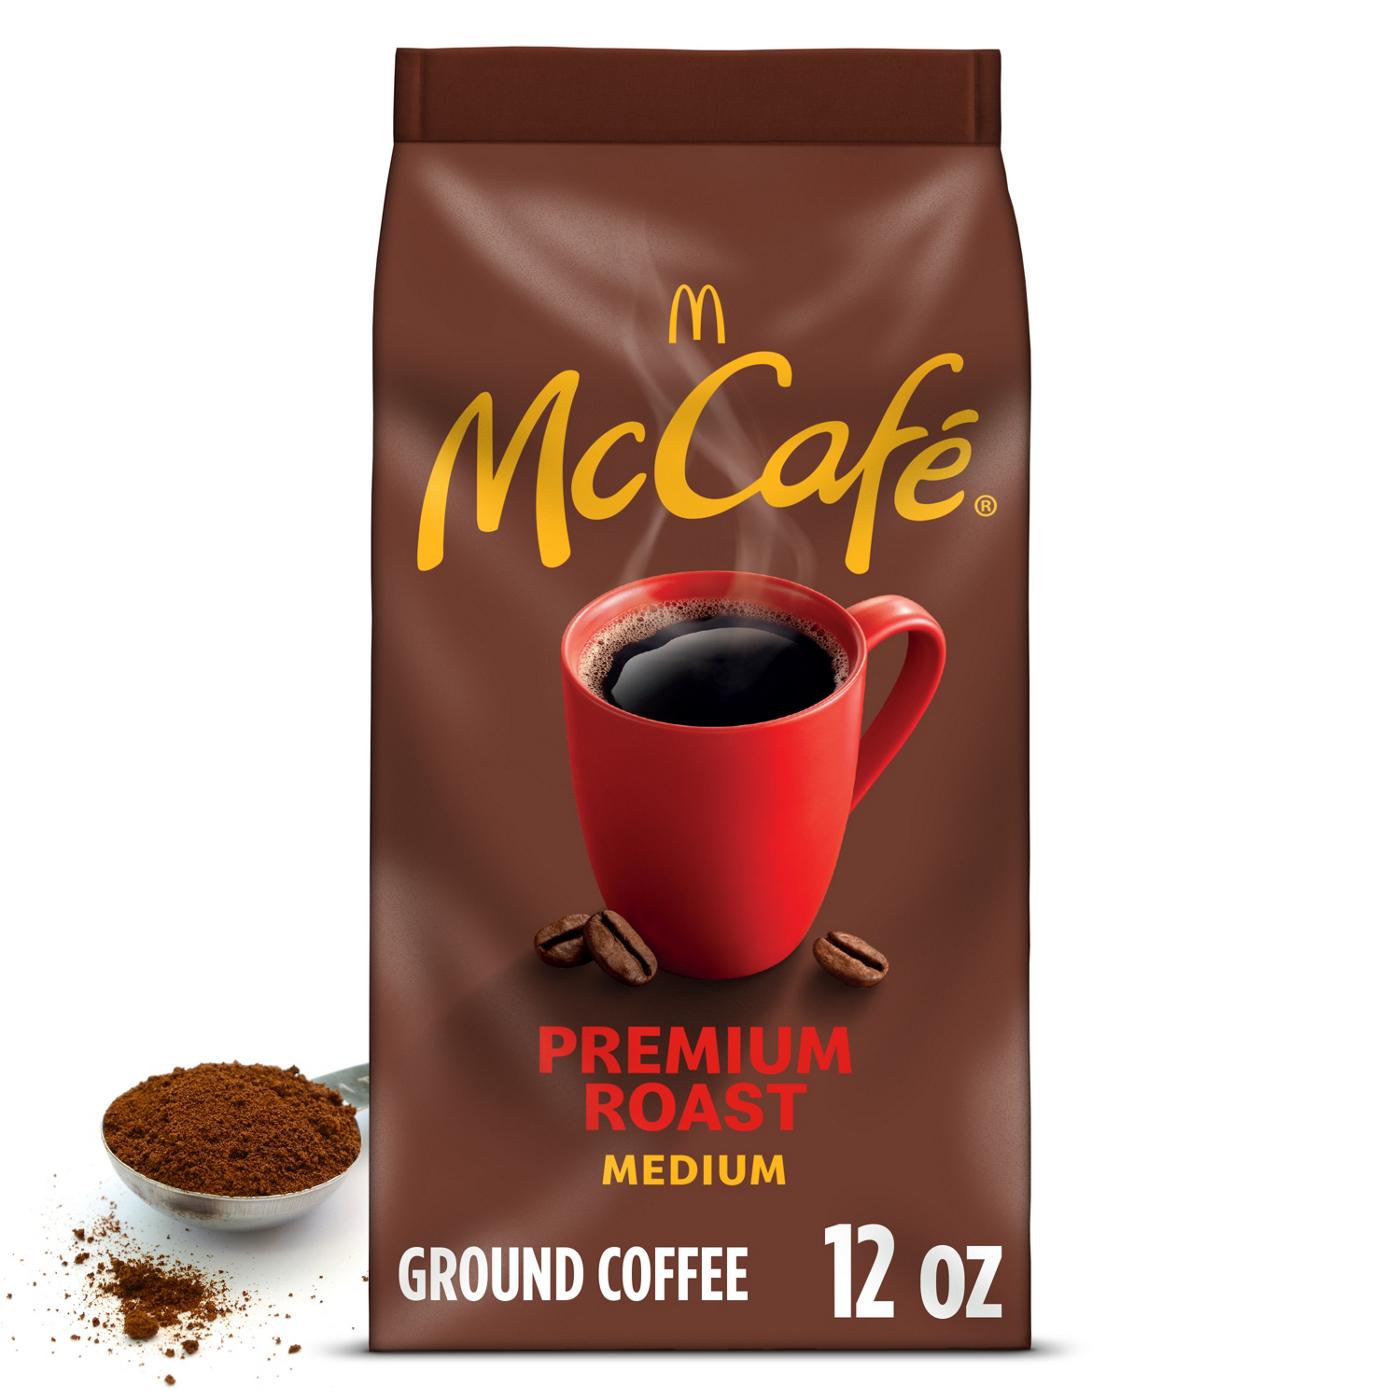 McCafe Premium Roast Medium Ground Coffee; image 5 of 7